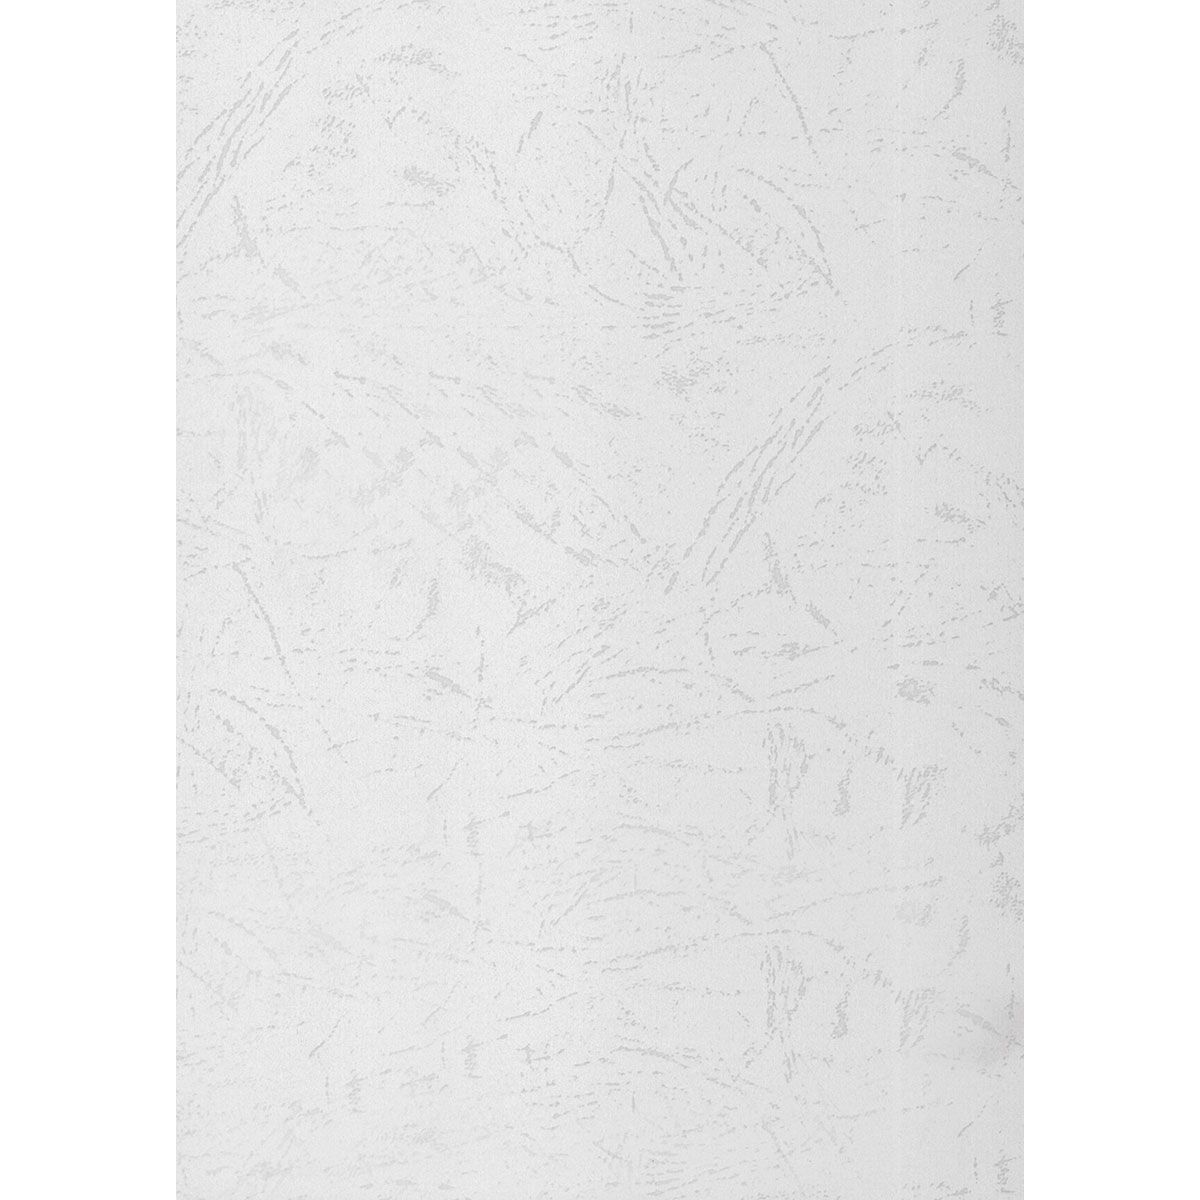 Karton do bindowania skóropodobny A4 biały 250g Titanum